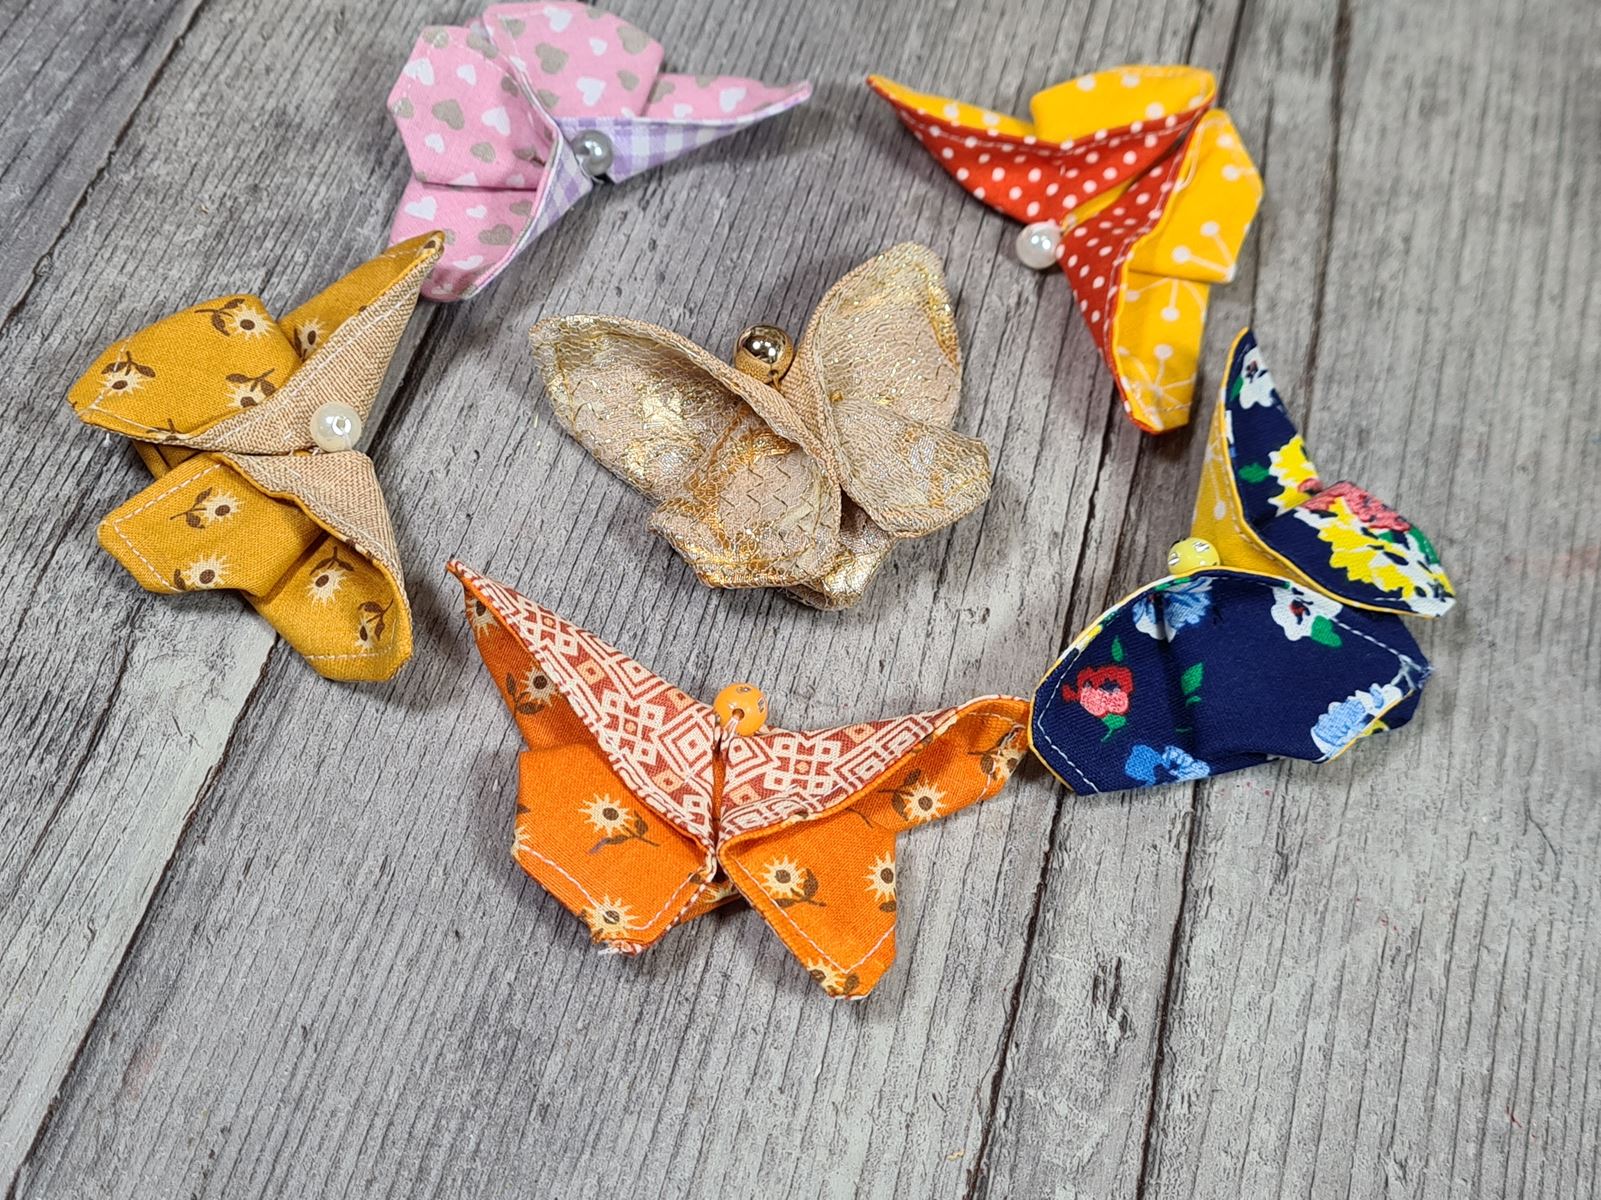 DIY-papillons-en-tissu-pliage-origami-avec-restes-de-tissu-facile-printemps-pâques